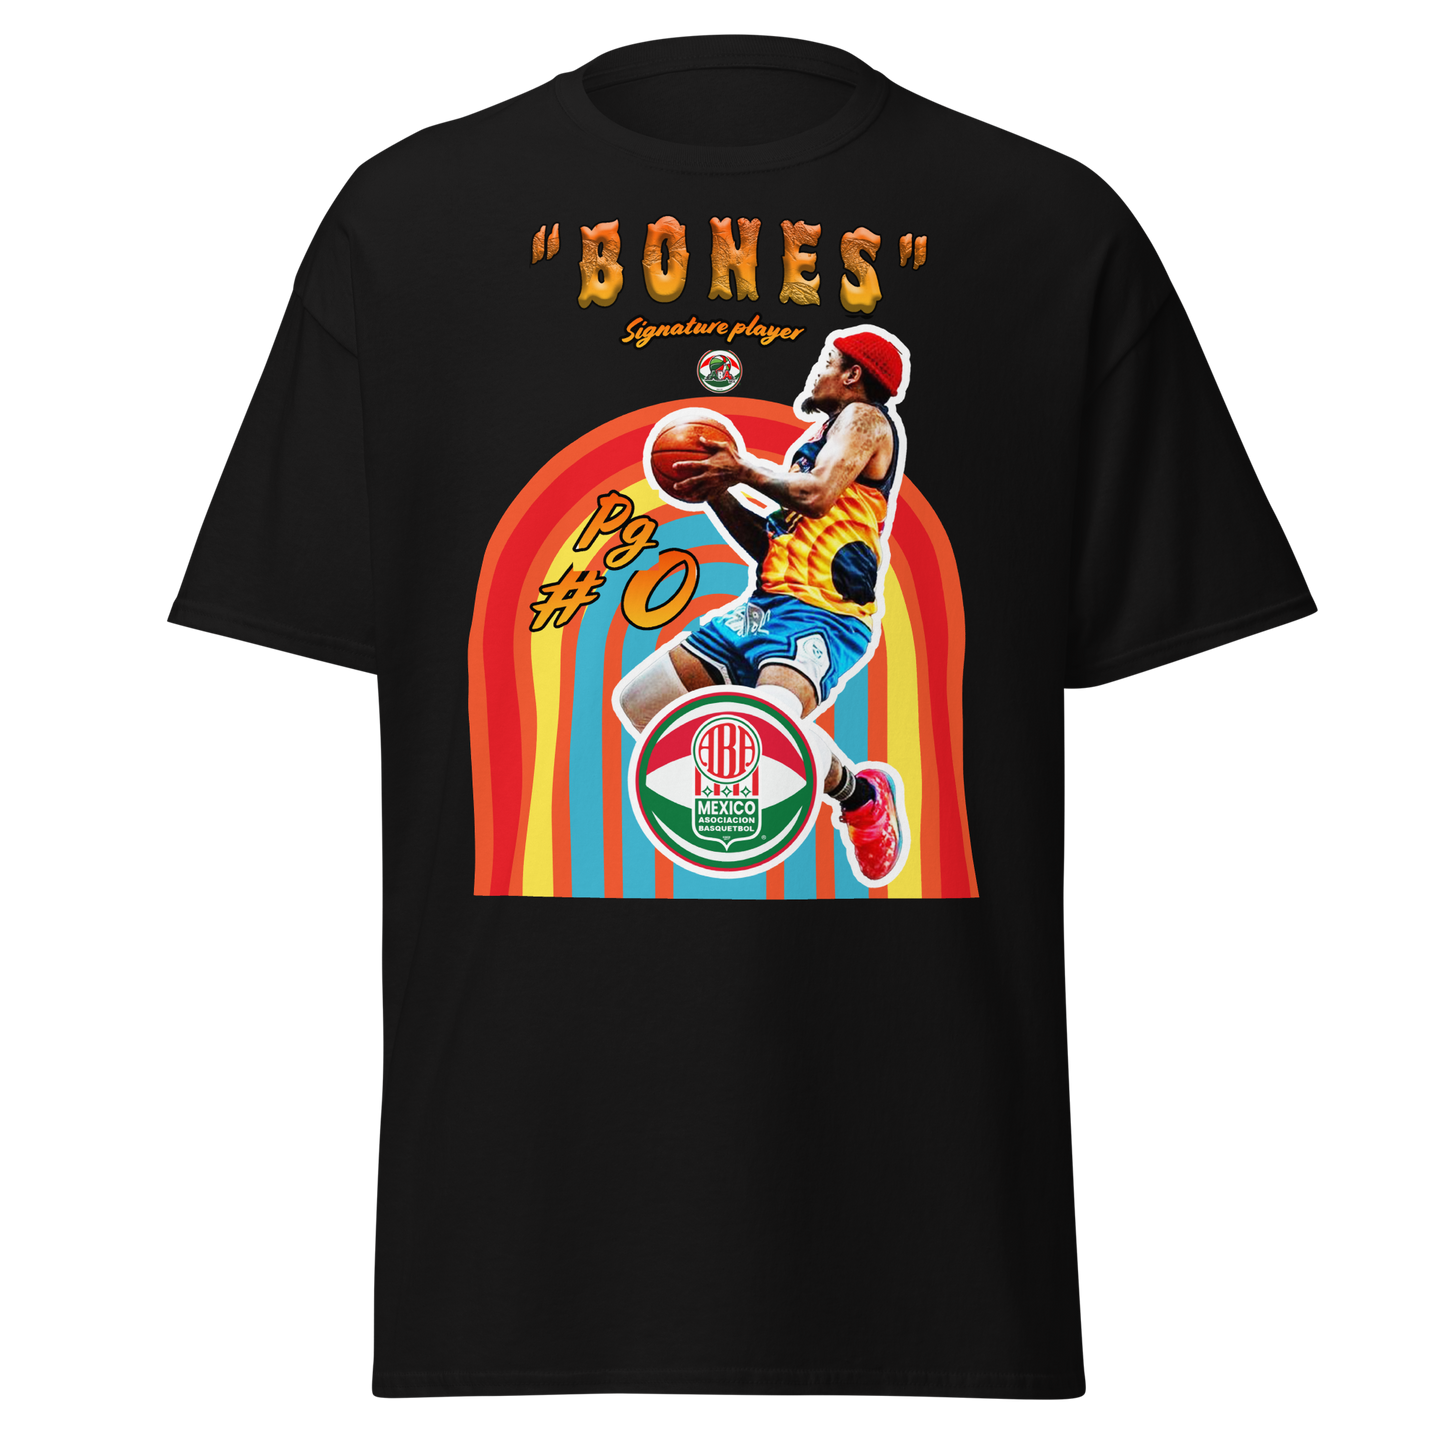 "Bones Bagaunte" Signature T-Shirt